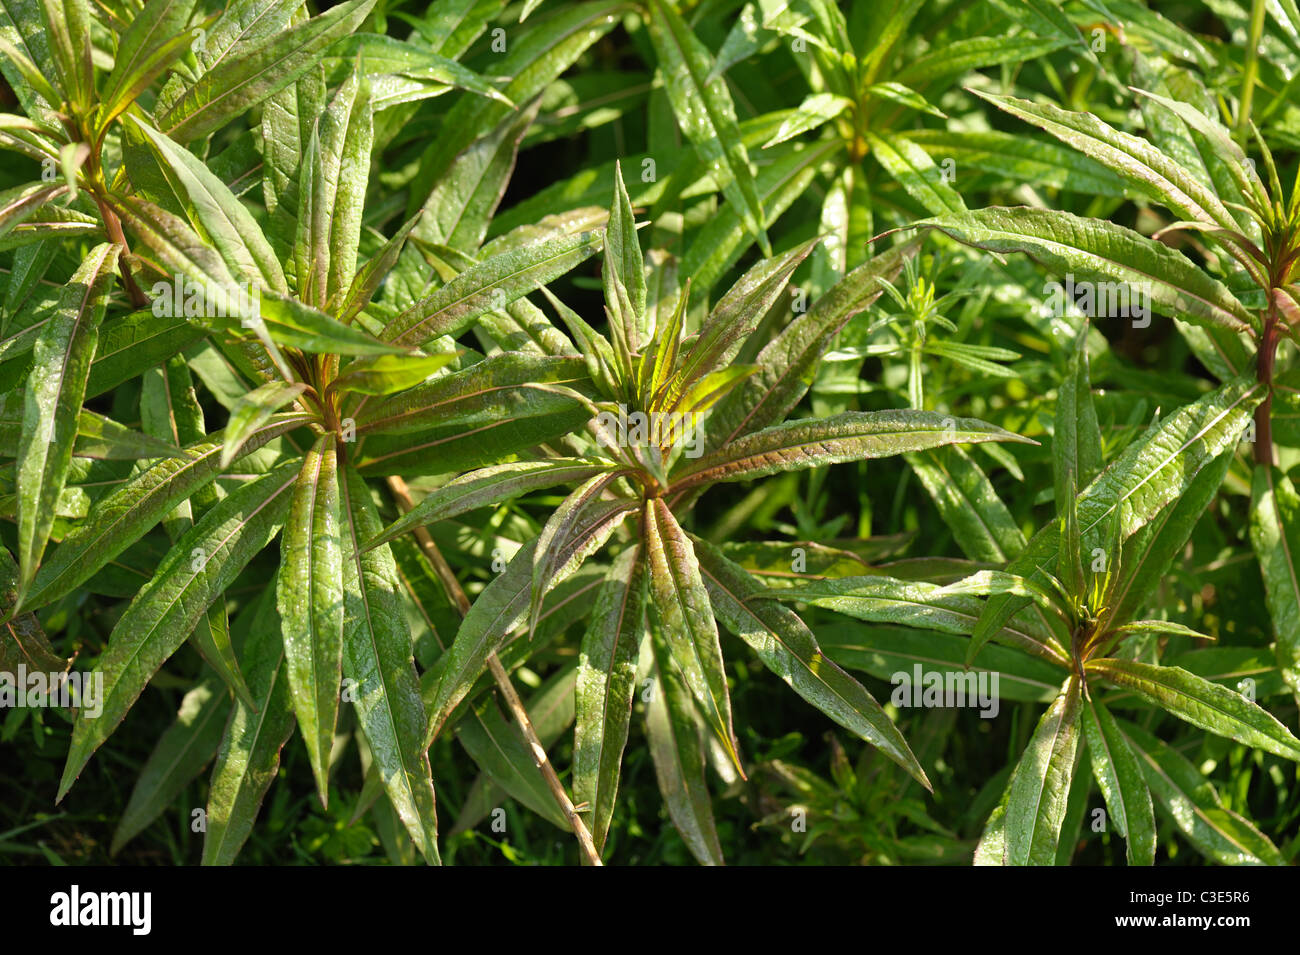 Young spring leaves of rosebay willowherb (Chamaenerion augustifolium) Stock Photo